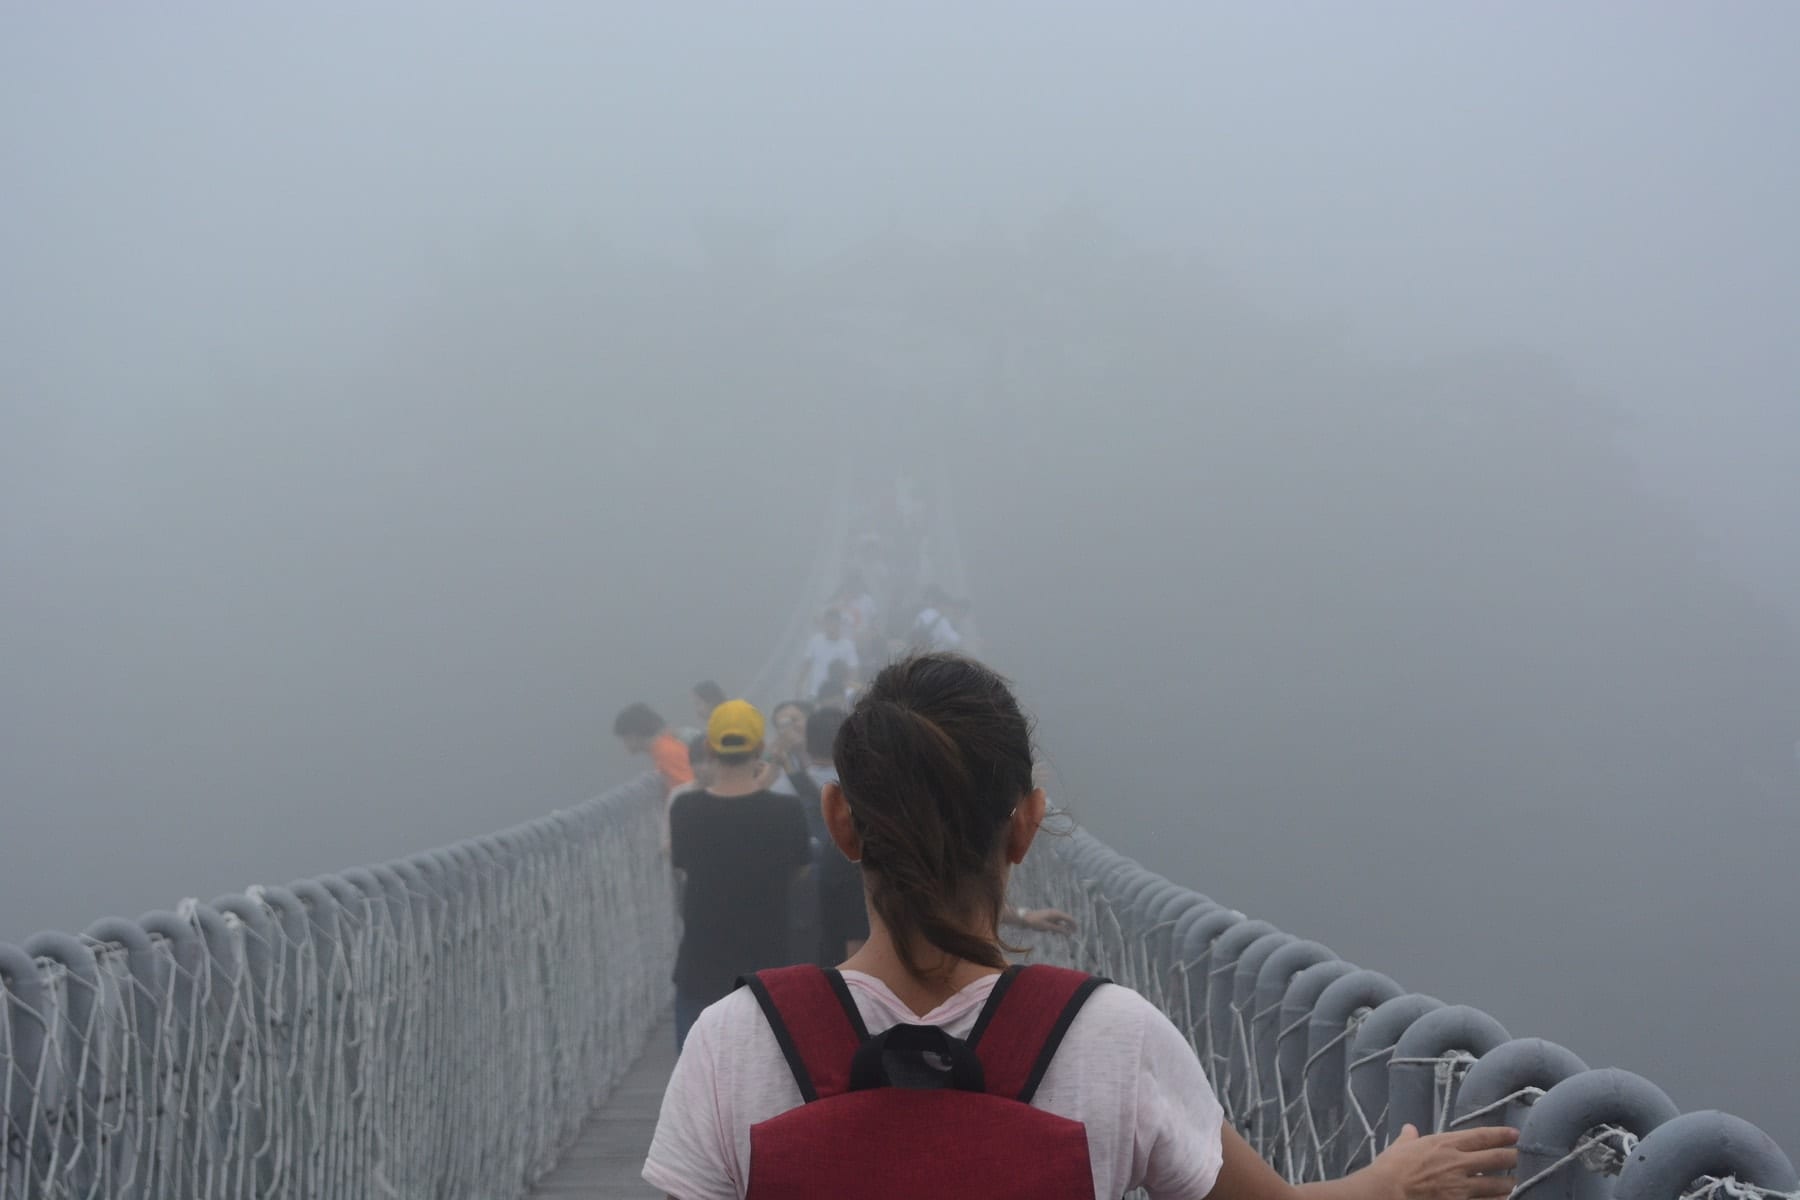 alto ponte sospeso Cina